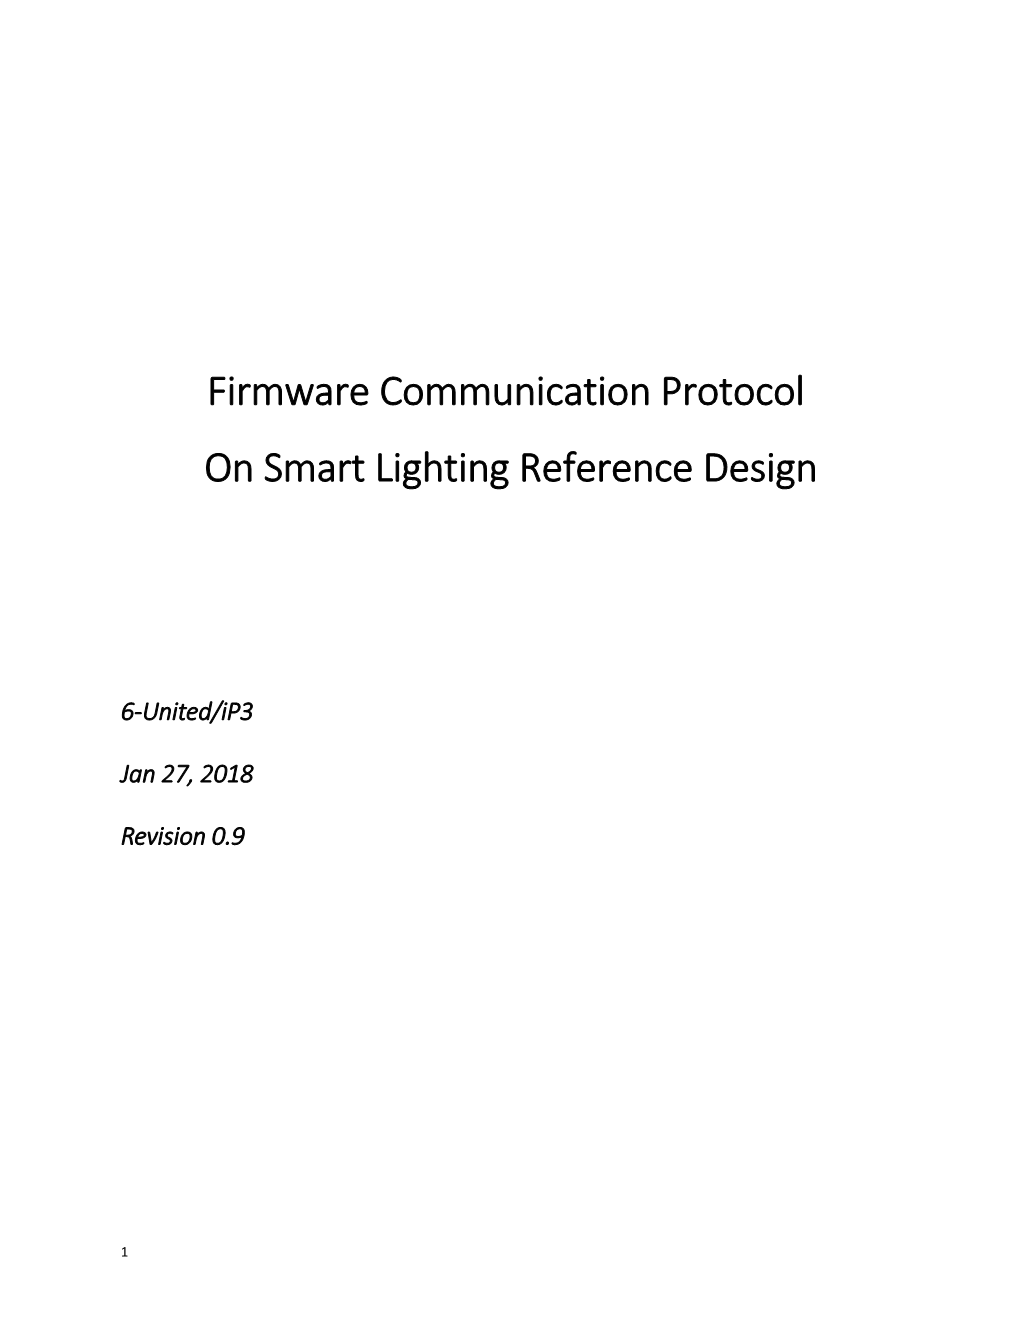 On Smart Lighting Reference Design